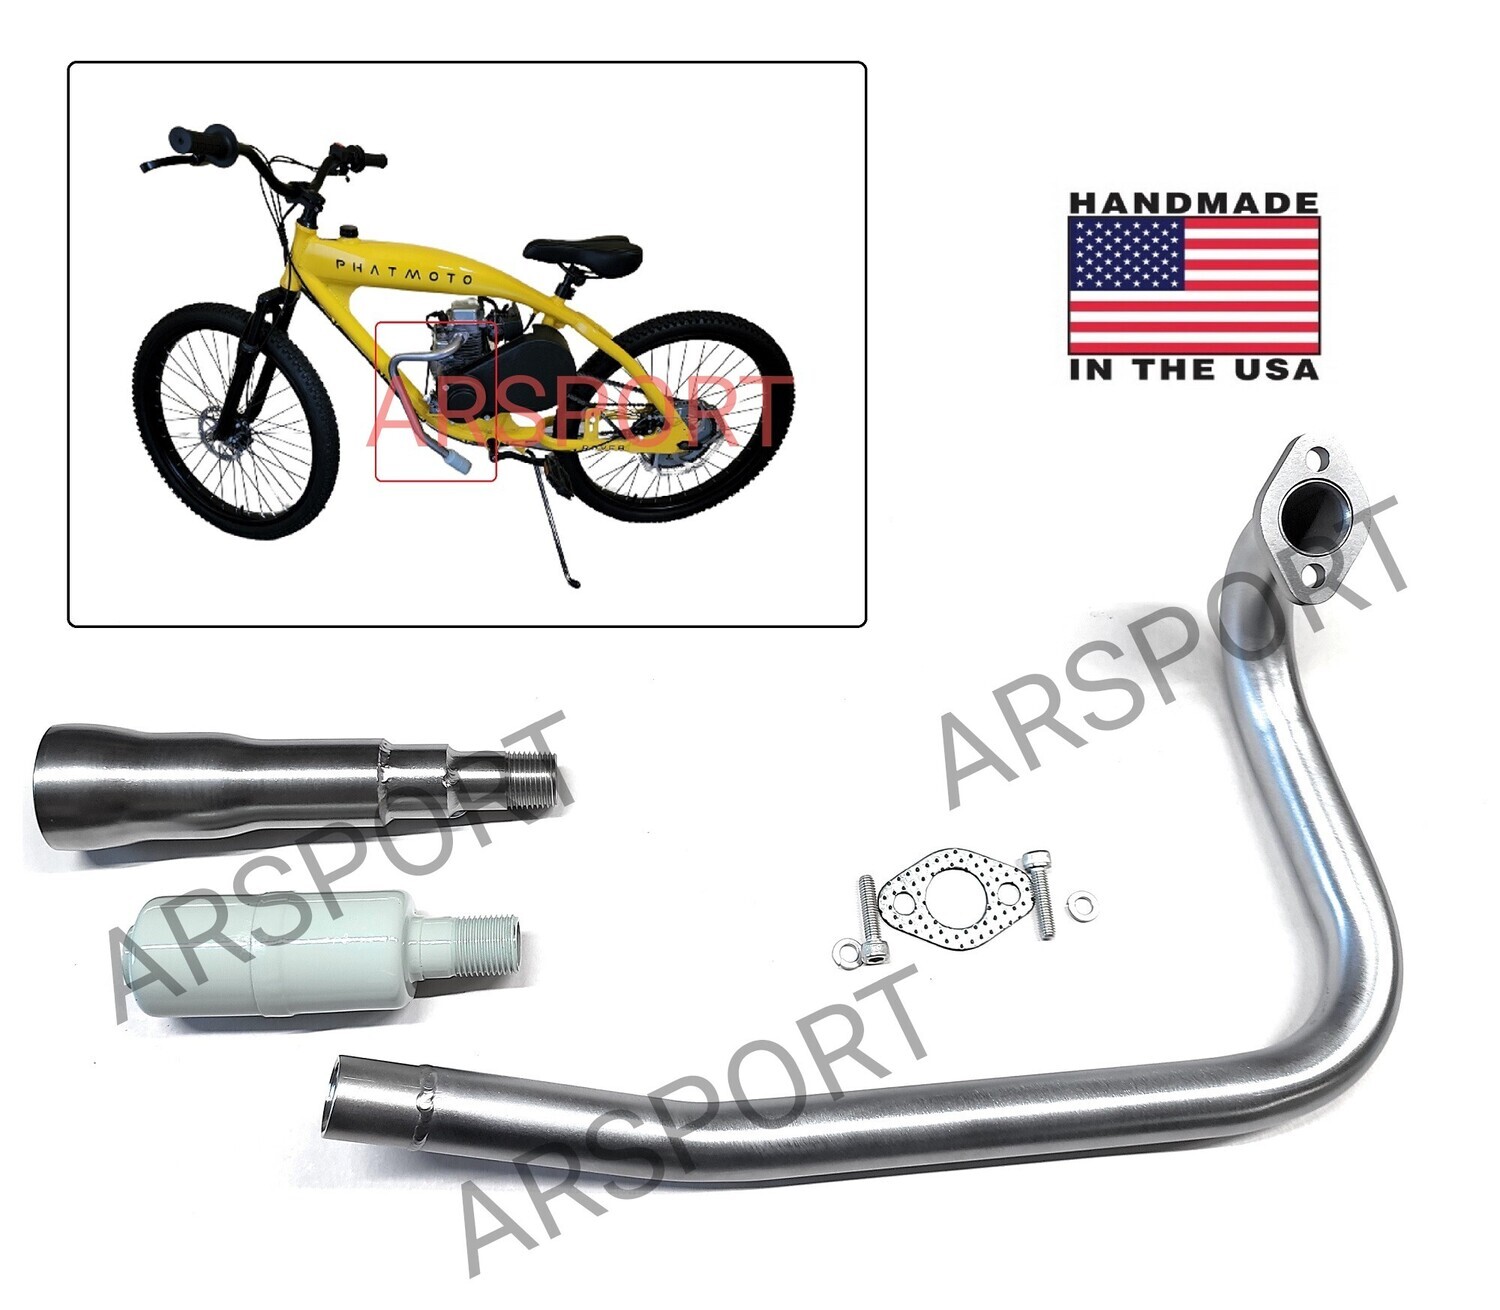 Exhaust muffler / Header Phatmoto Rover Motorized bicycle. ALL TERRAIN Fat Tire